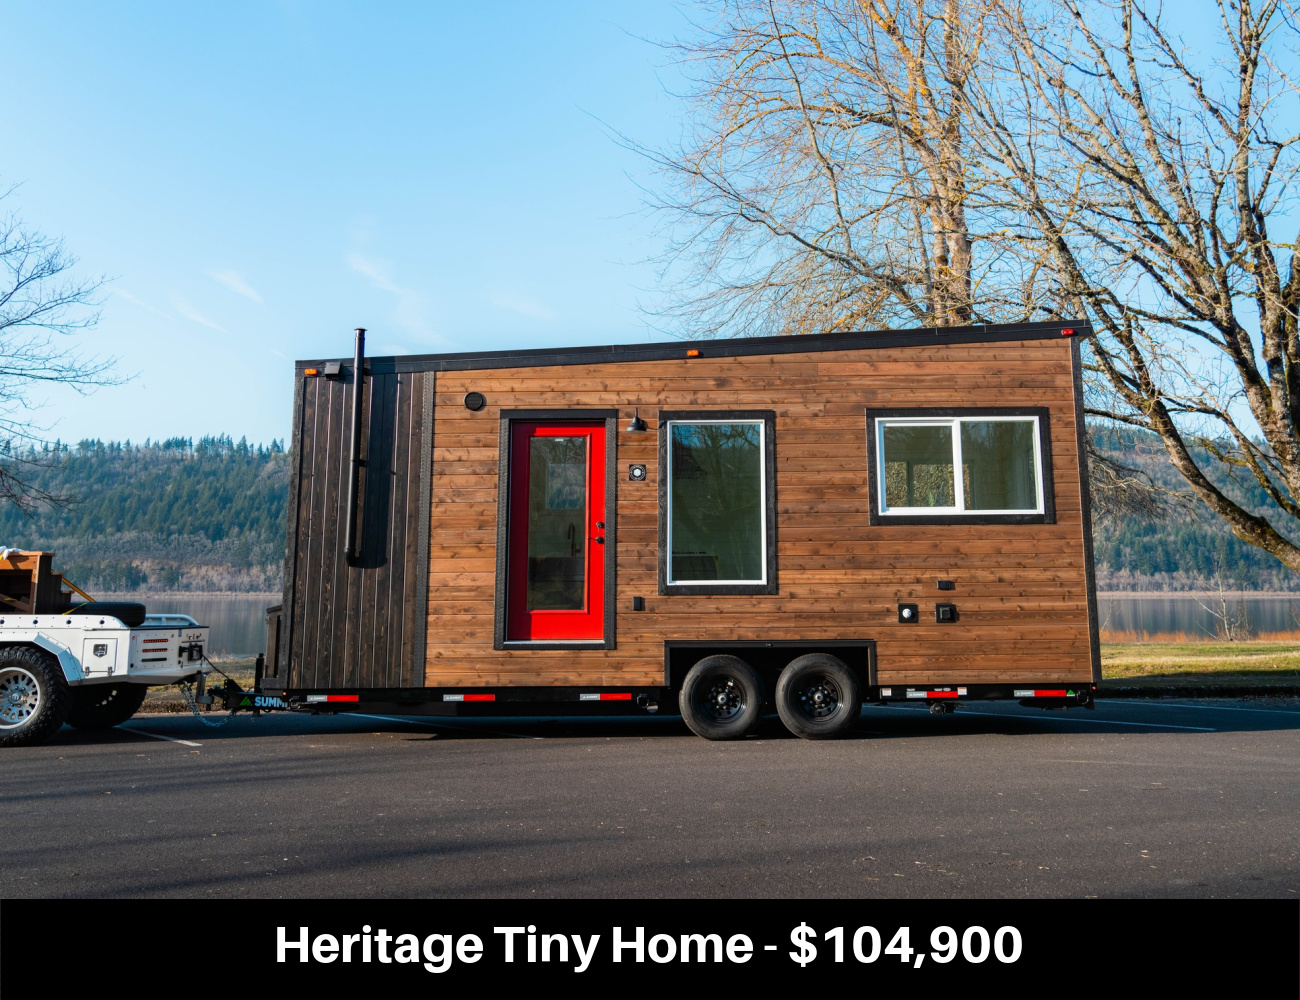 Heritage Tiny Home - $104,900